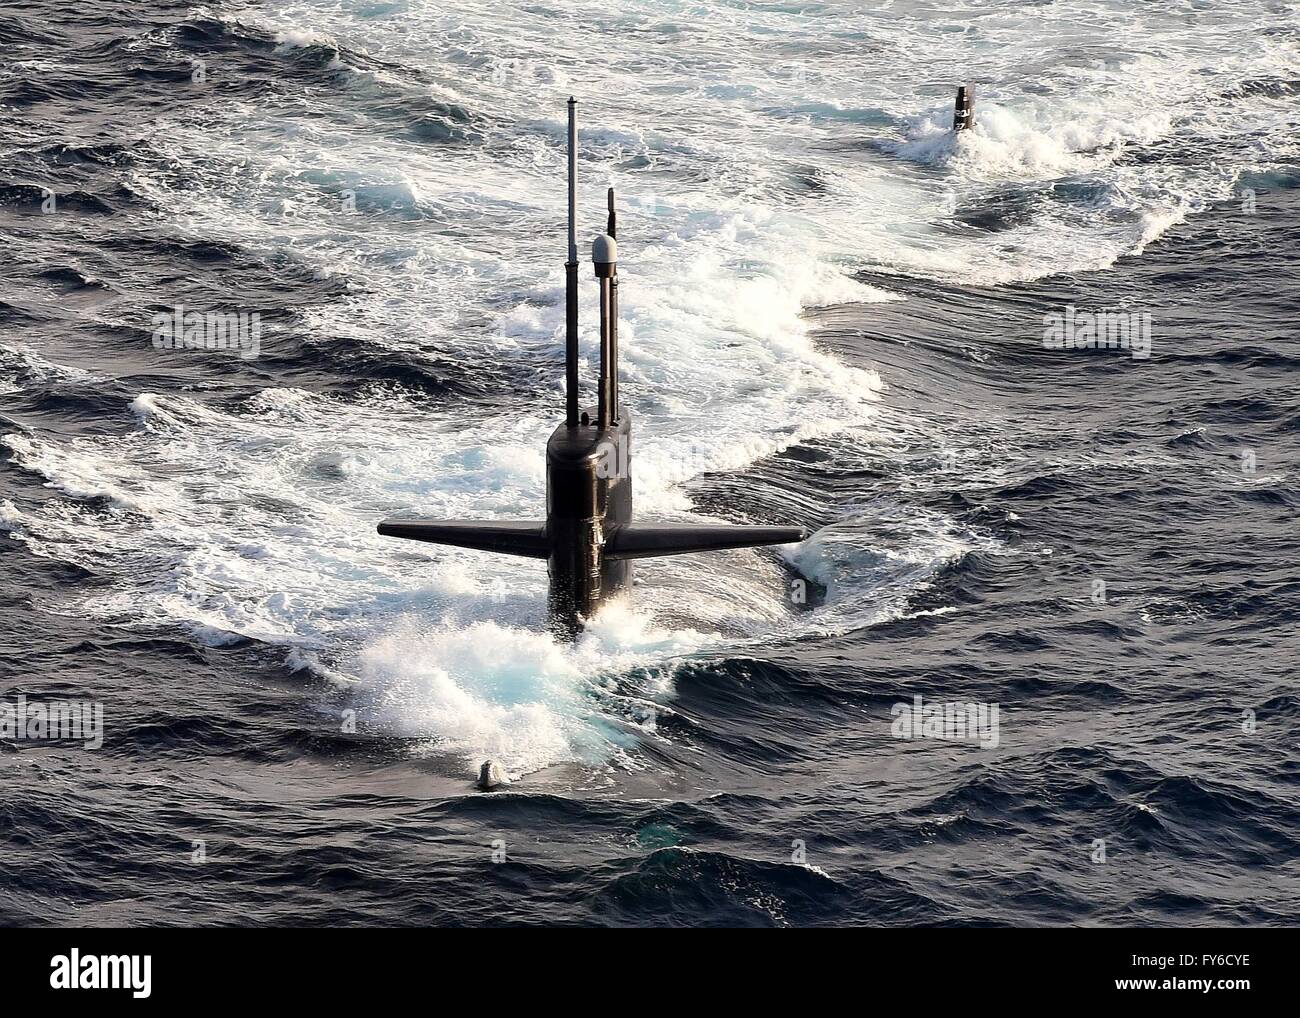 The U.S. Navy Los Angeles-class attack submarine USS Helena transits the Atlantic Ocean March 24, 2016. Stock Photo